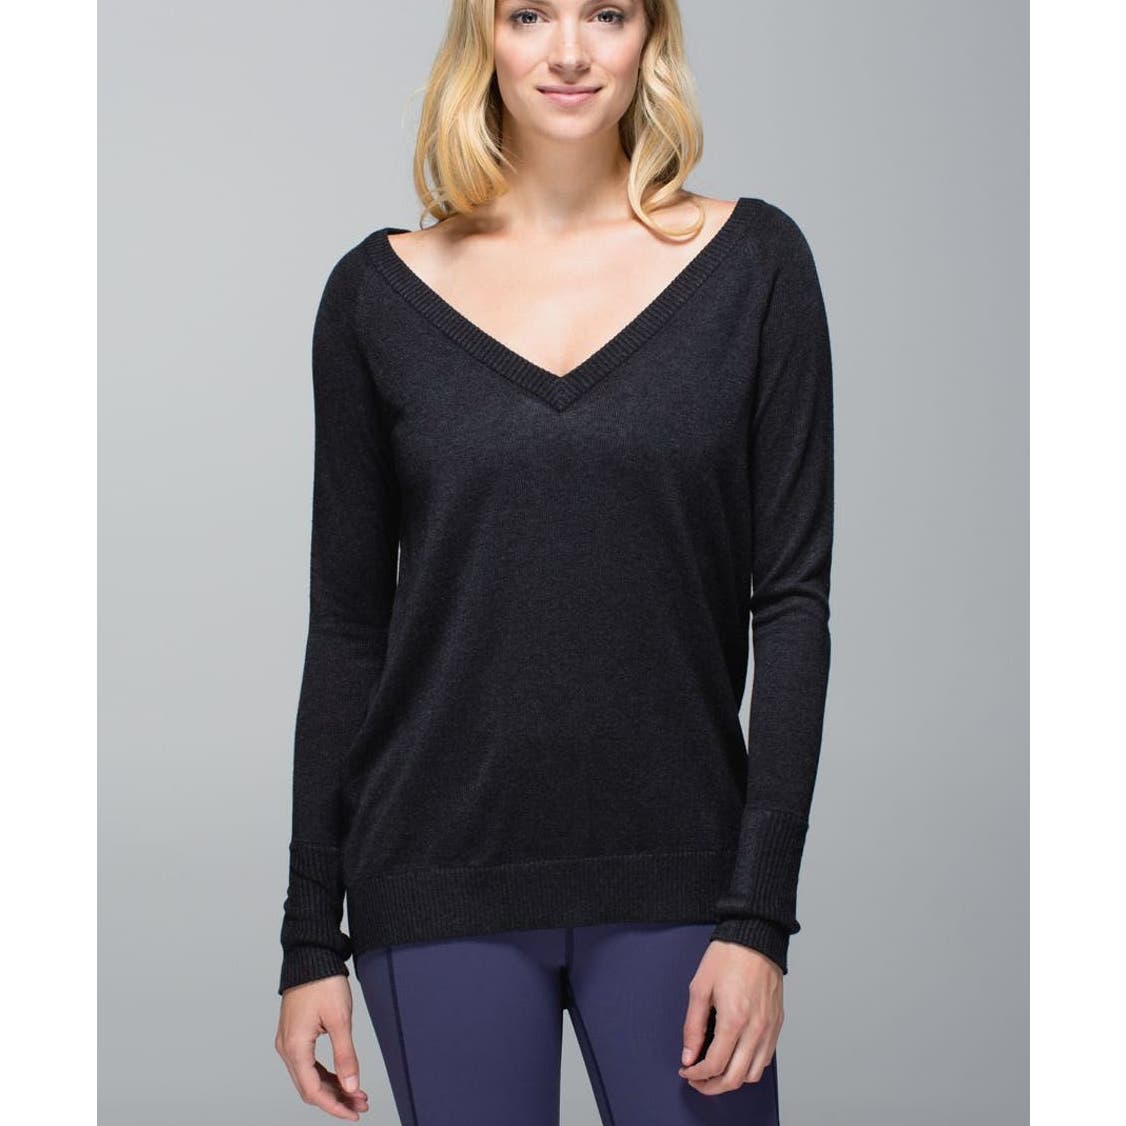 Lululemon Unity Pullover Open Scoop Back Long Sleeve Sweater Top Black Medium